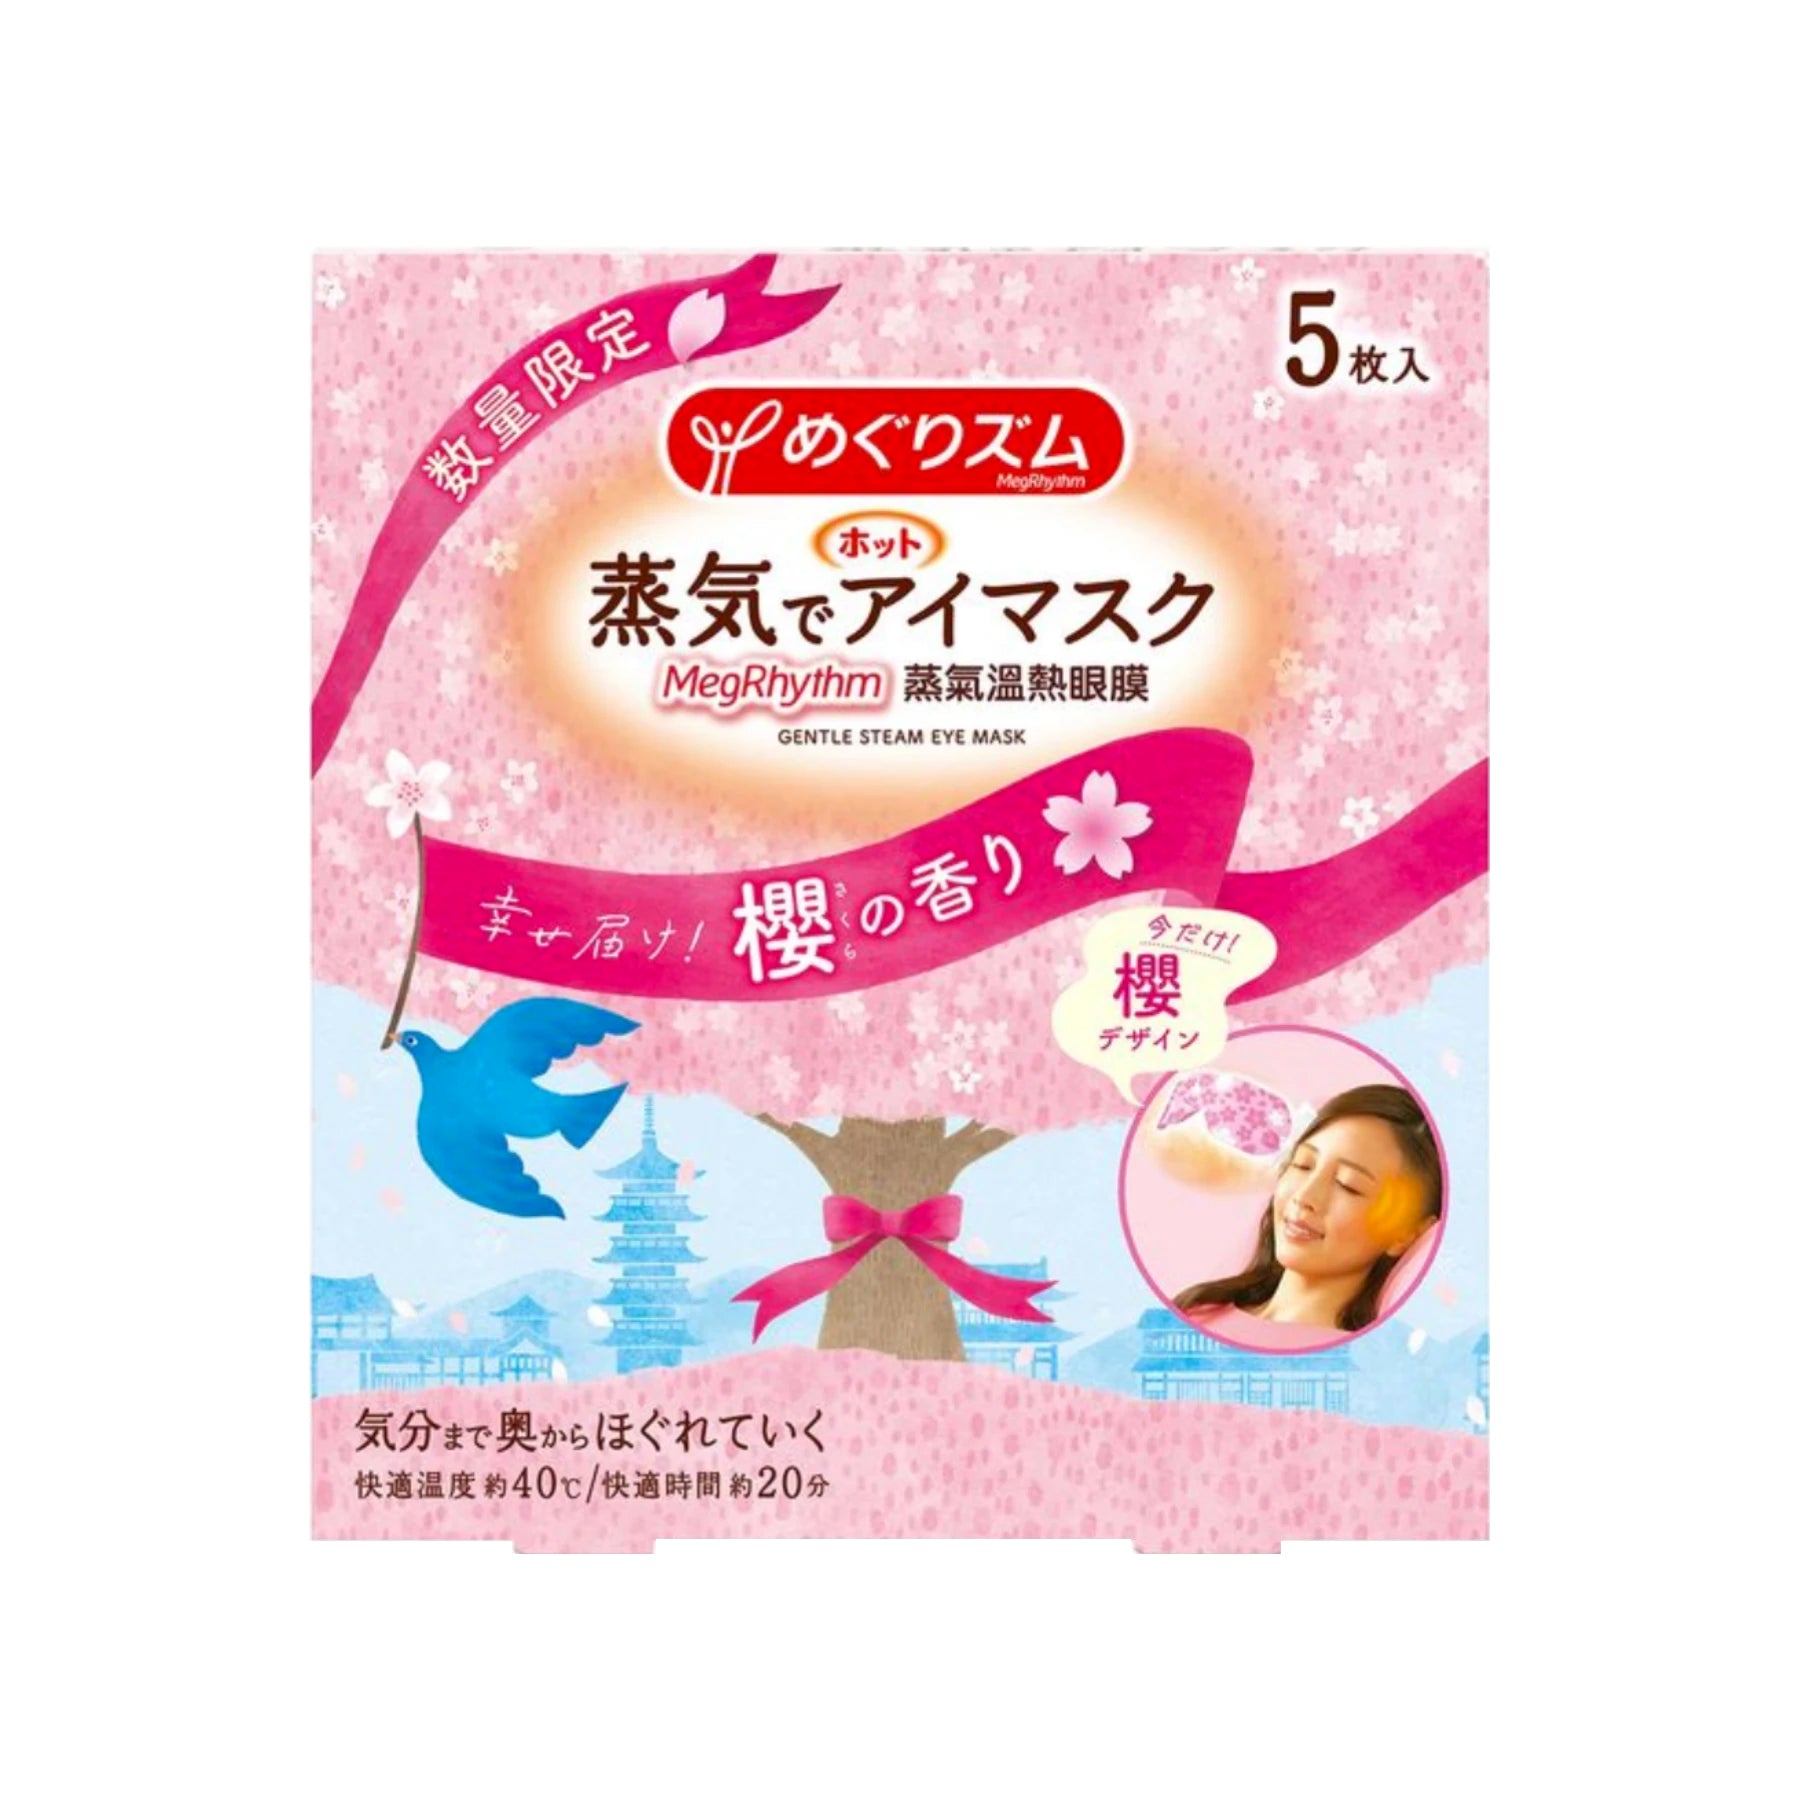 Kao Megurhythm Steam Hot Eye Mask - Sakura Cherry Blossom Beauty Kao   